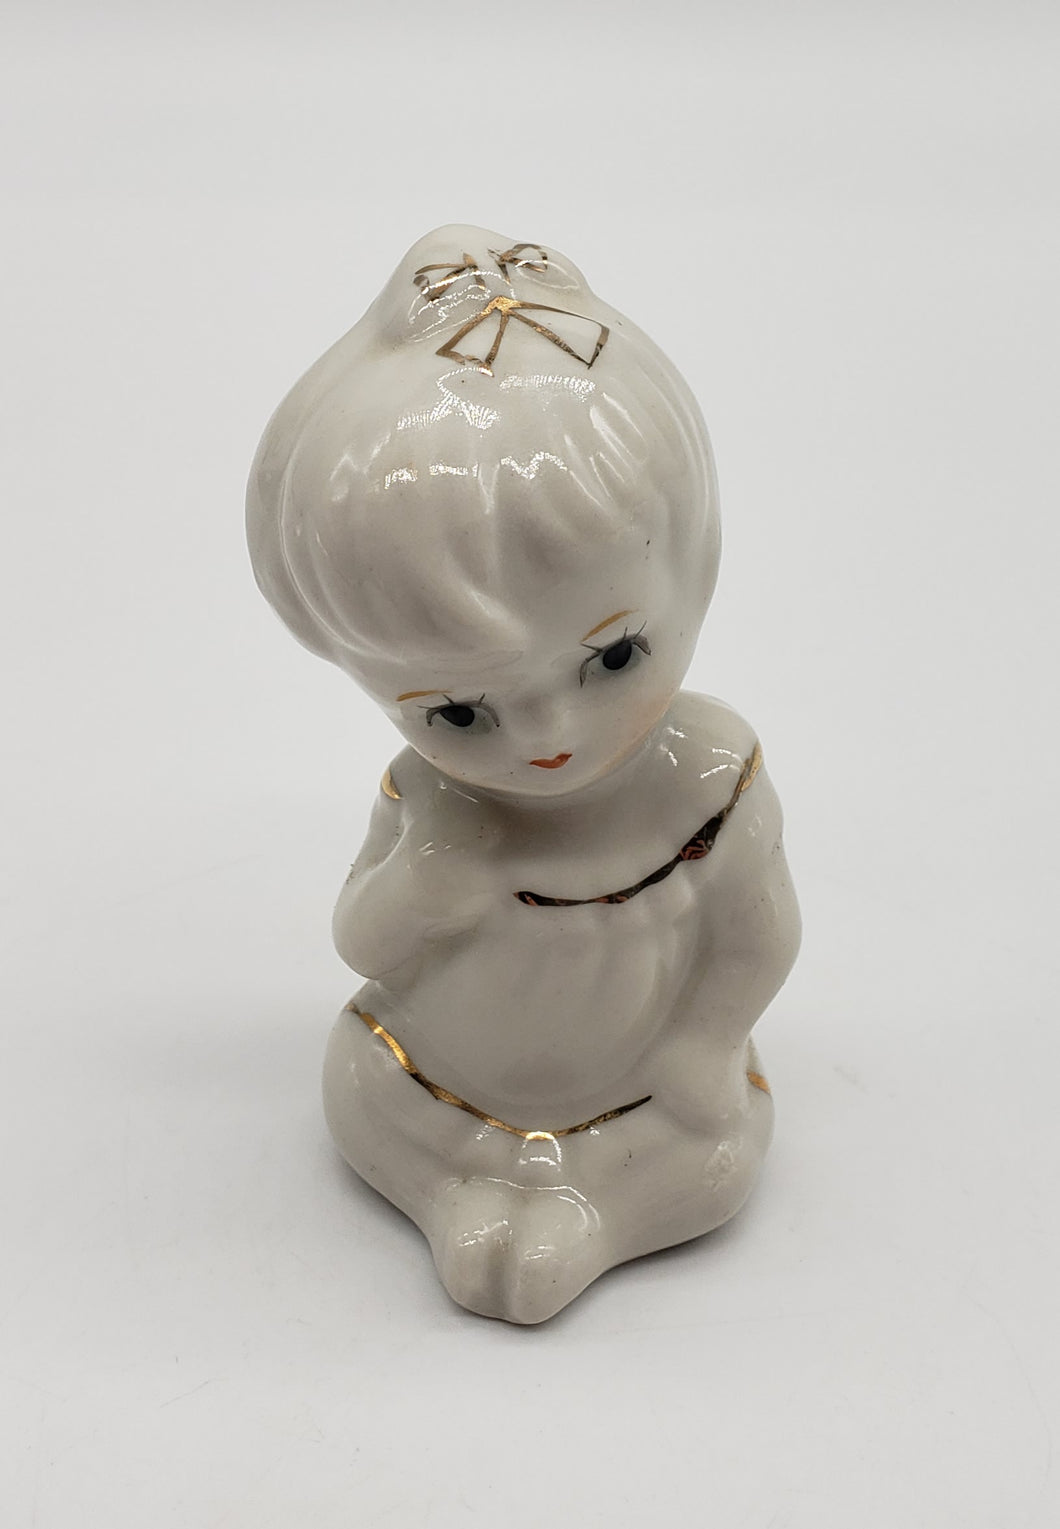 Vintage Ceramic Baby Figurine